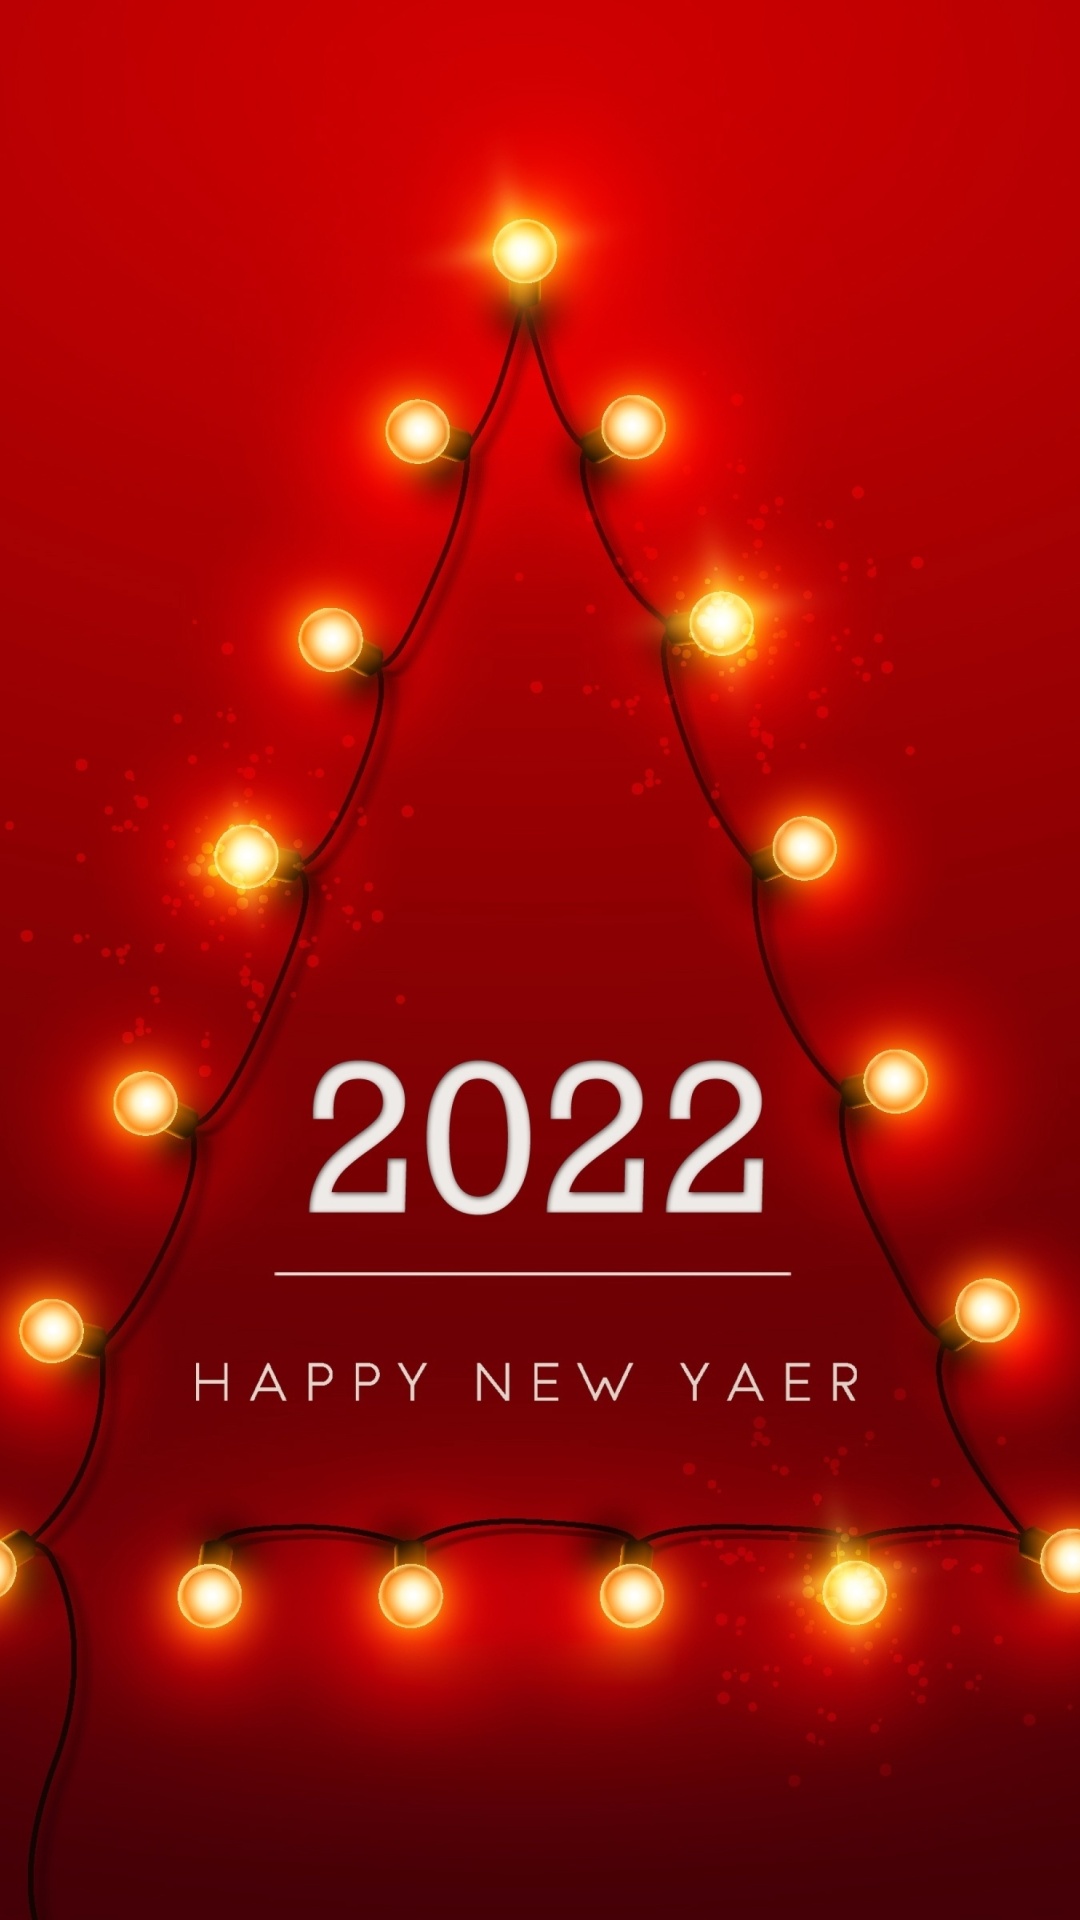 Happy New Year 2022 wallpaper 1080x1920